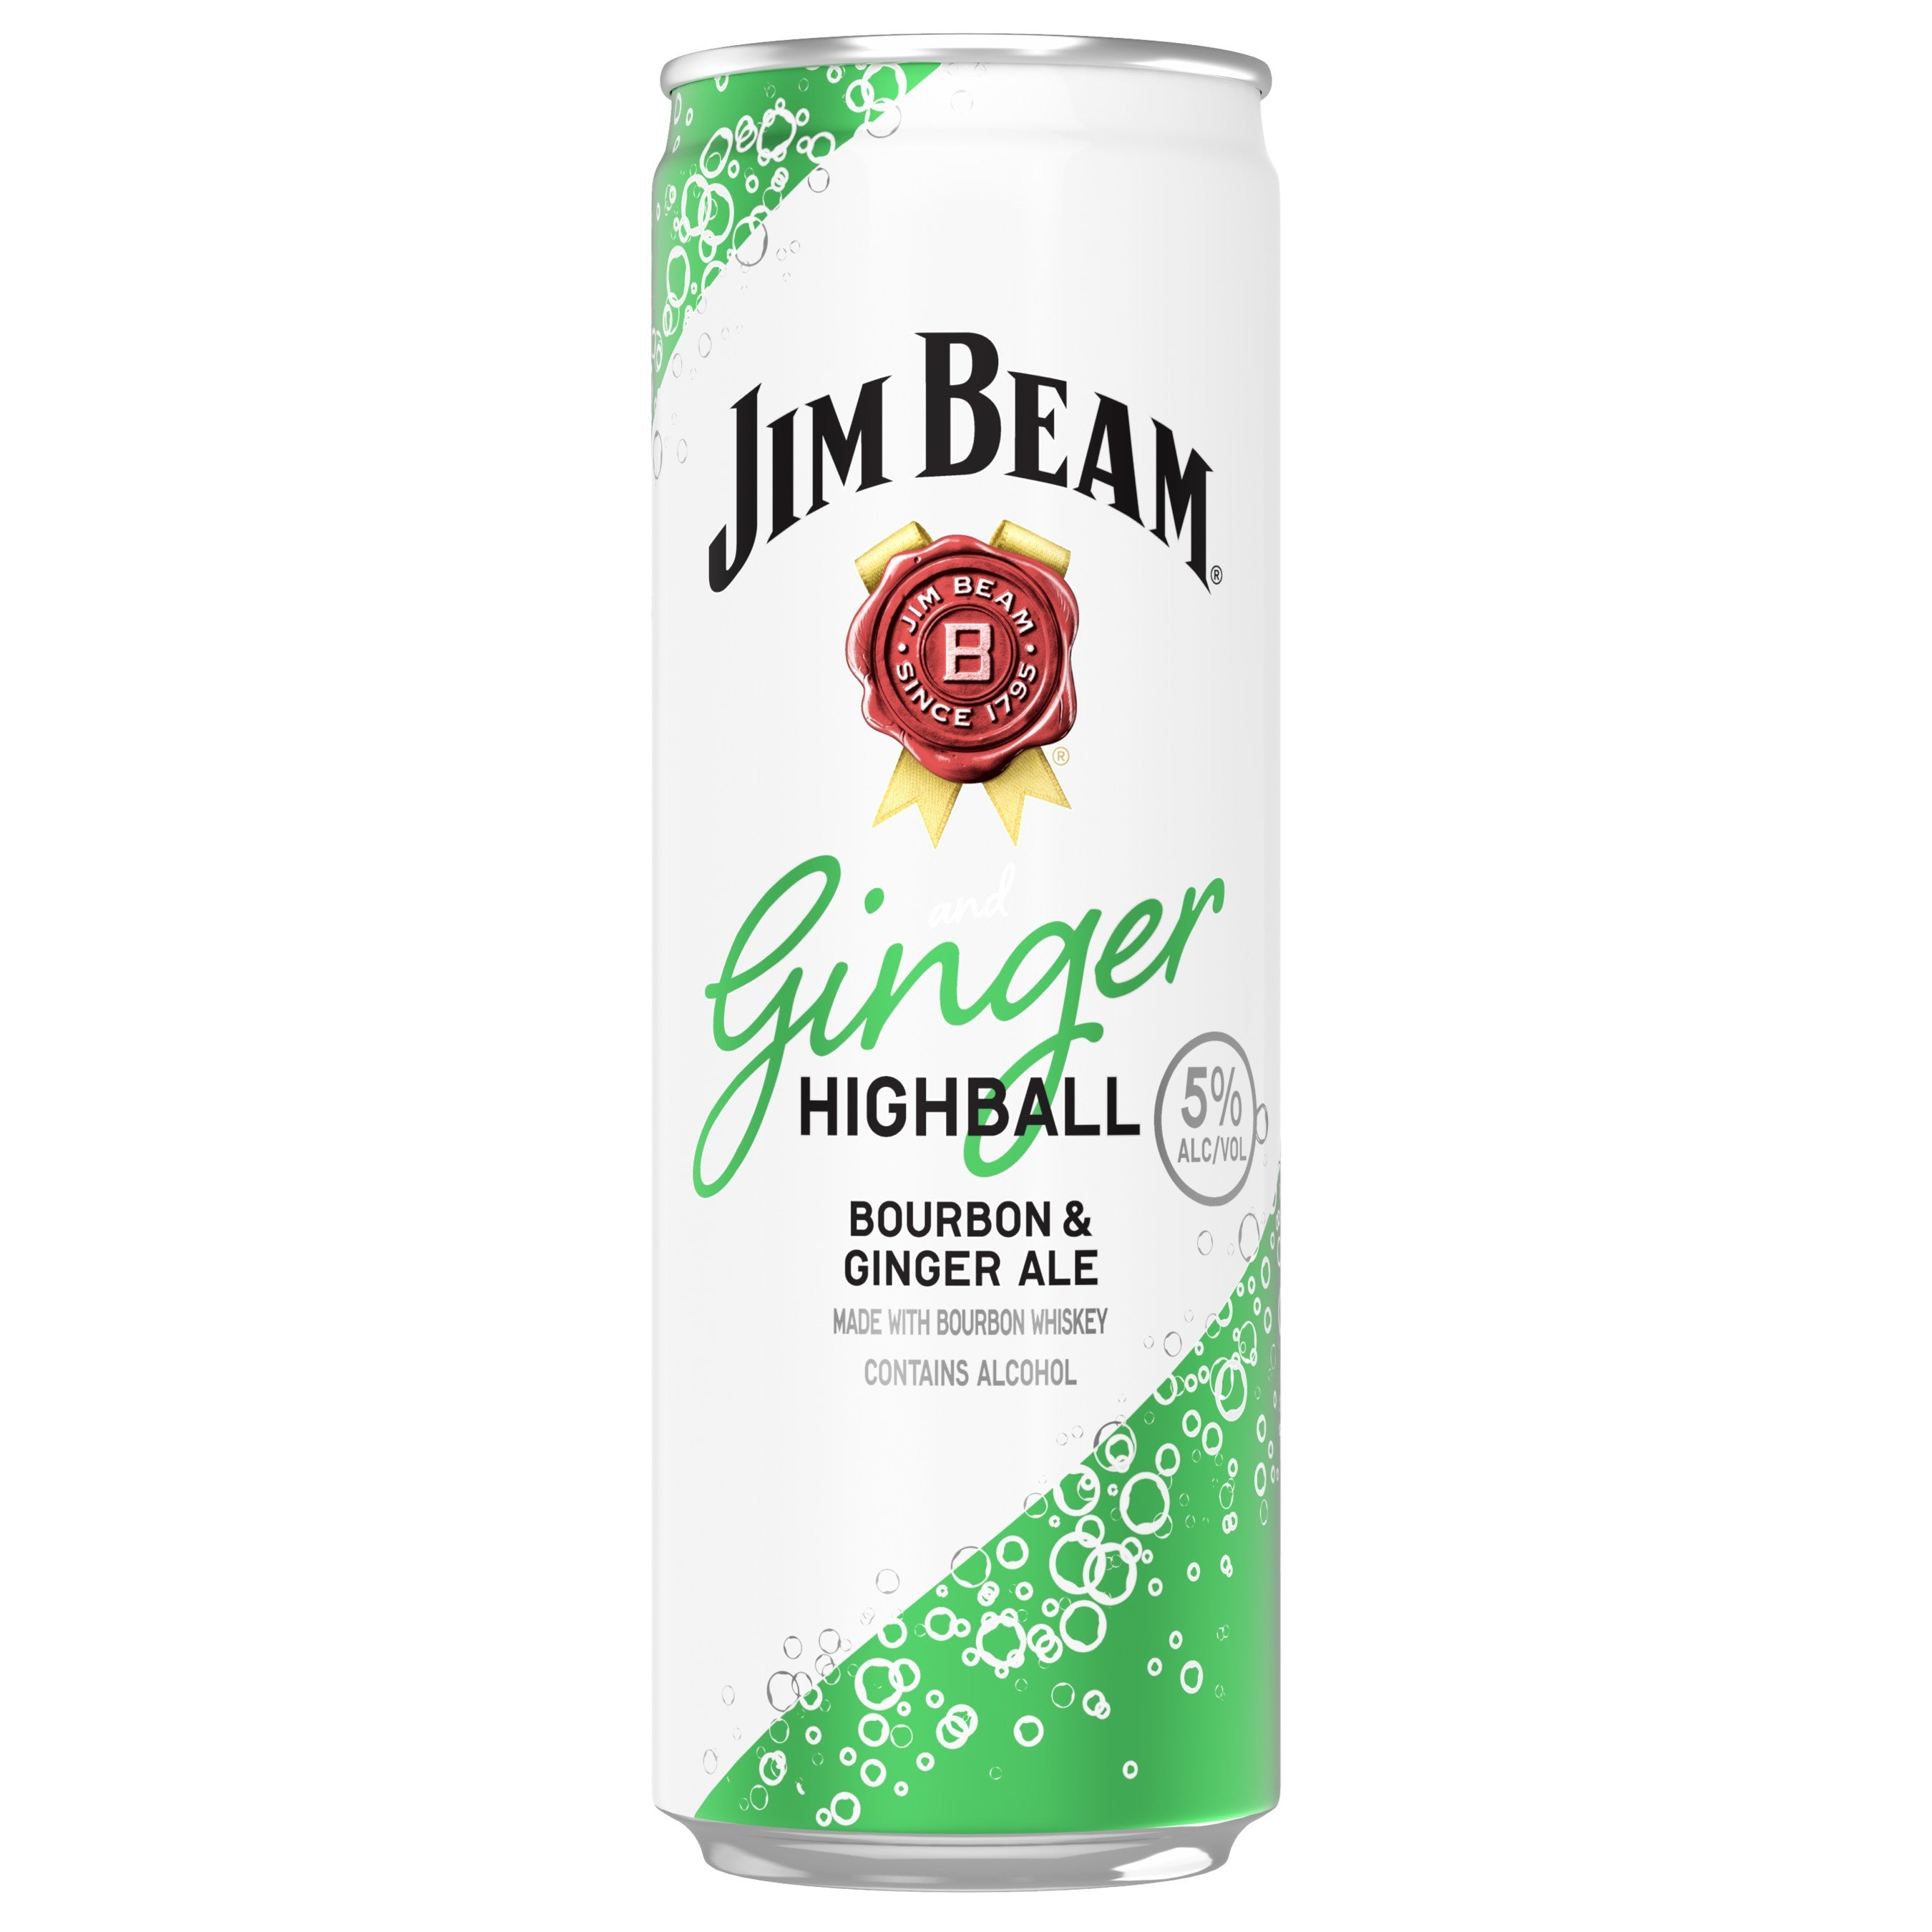 Jim Beam Ginger Highball 4 Pack Cans